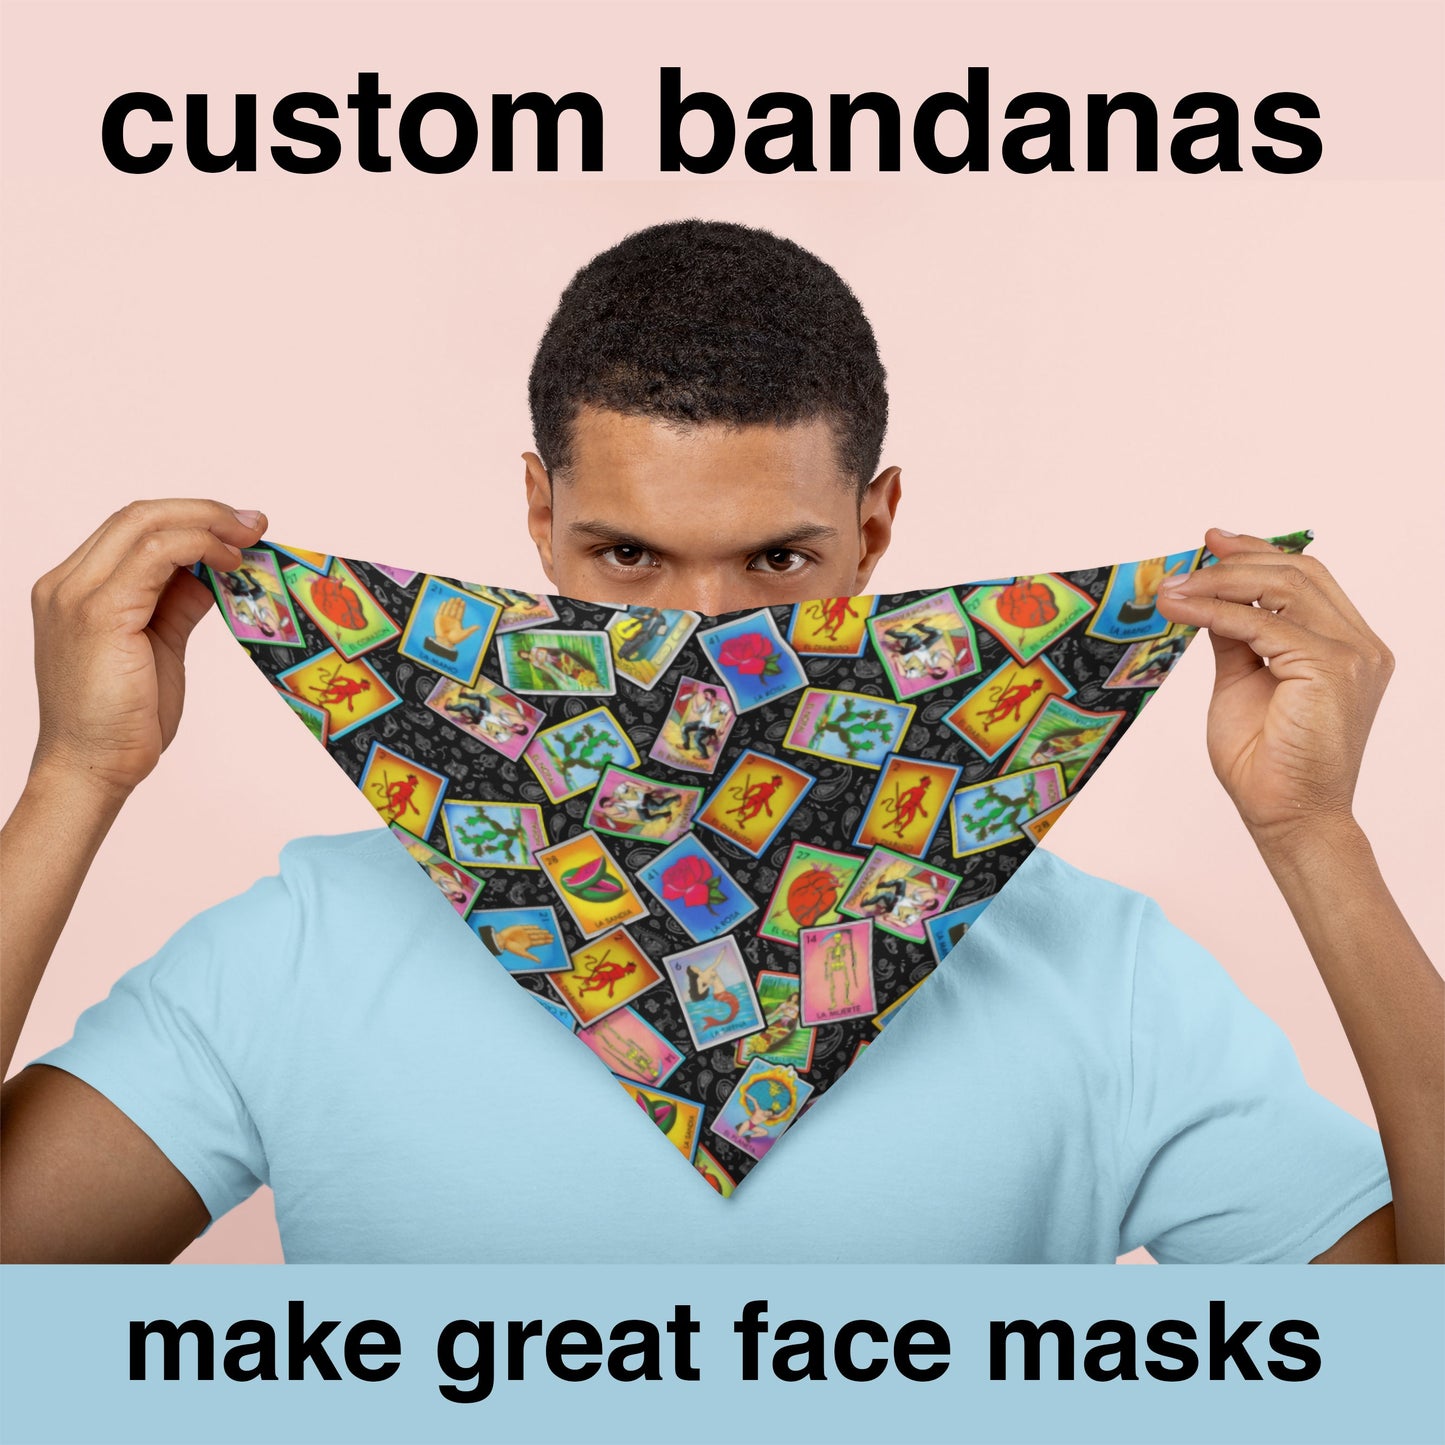 Custom Bandana Printing